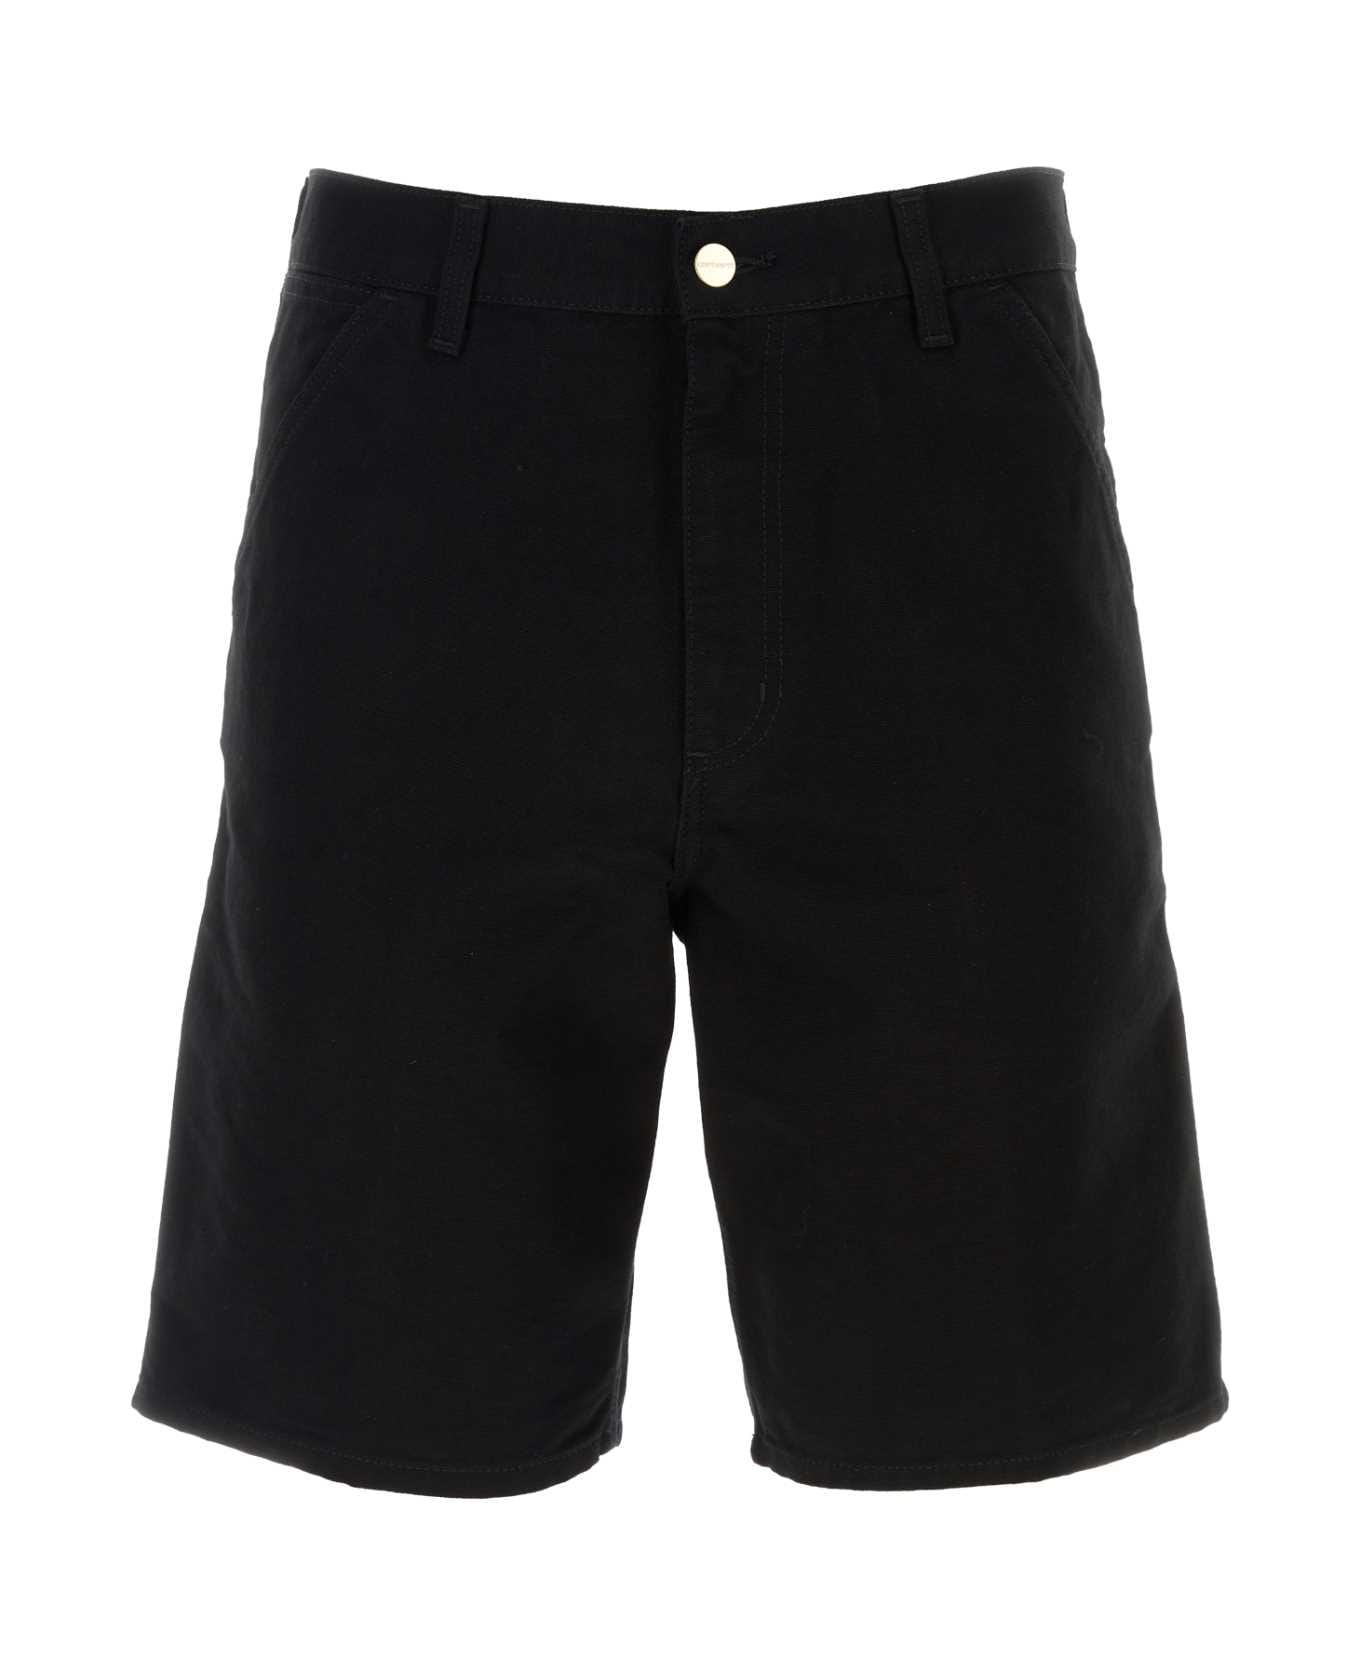 Carhartt Black Cotton Single Knee Short - Black